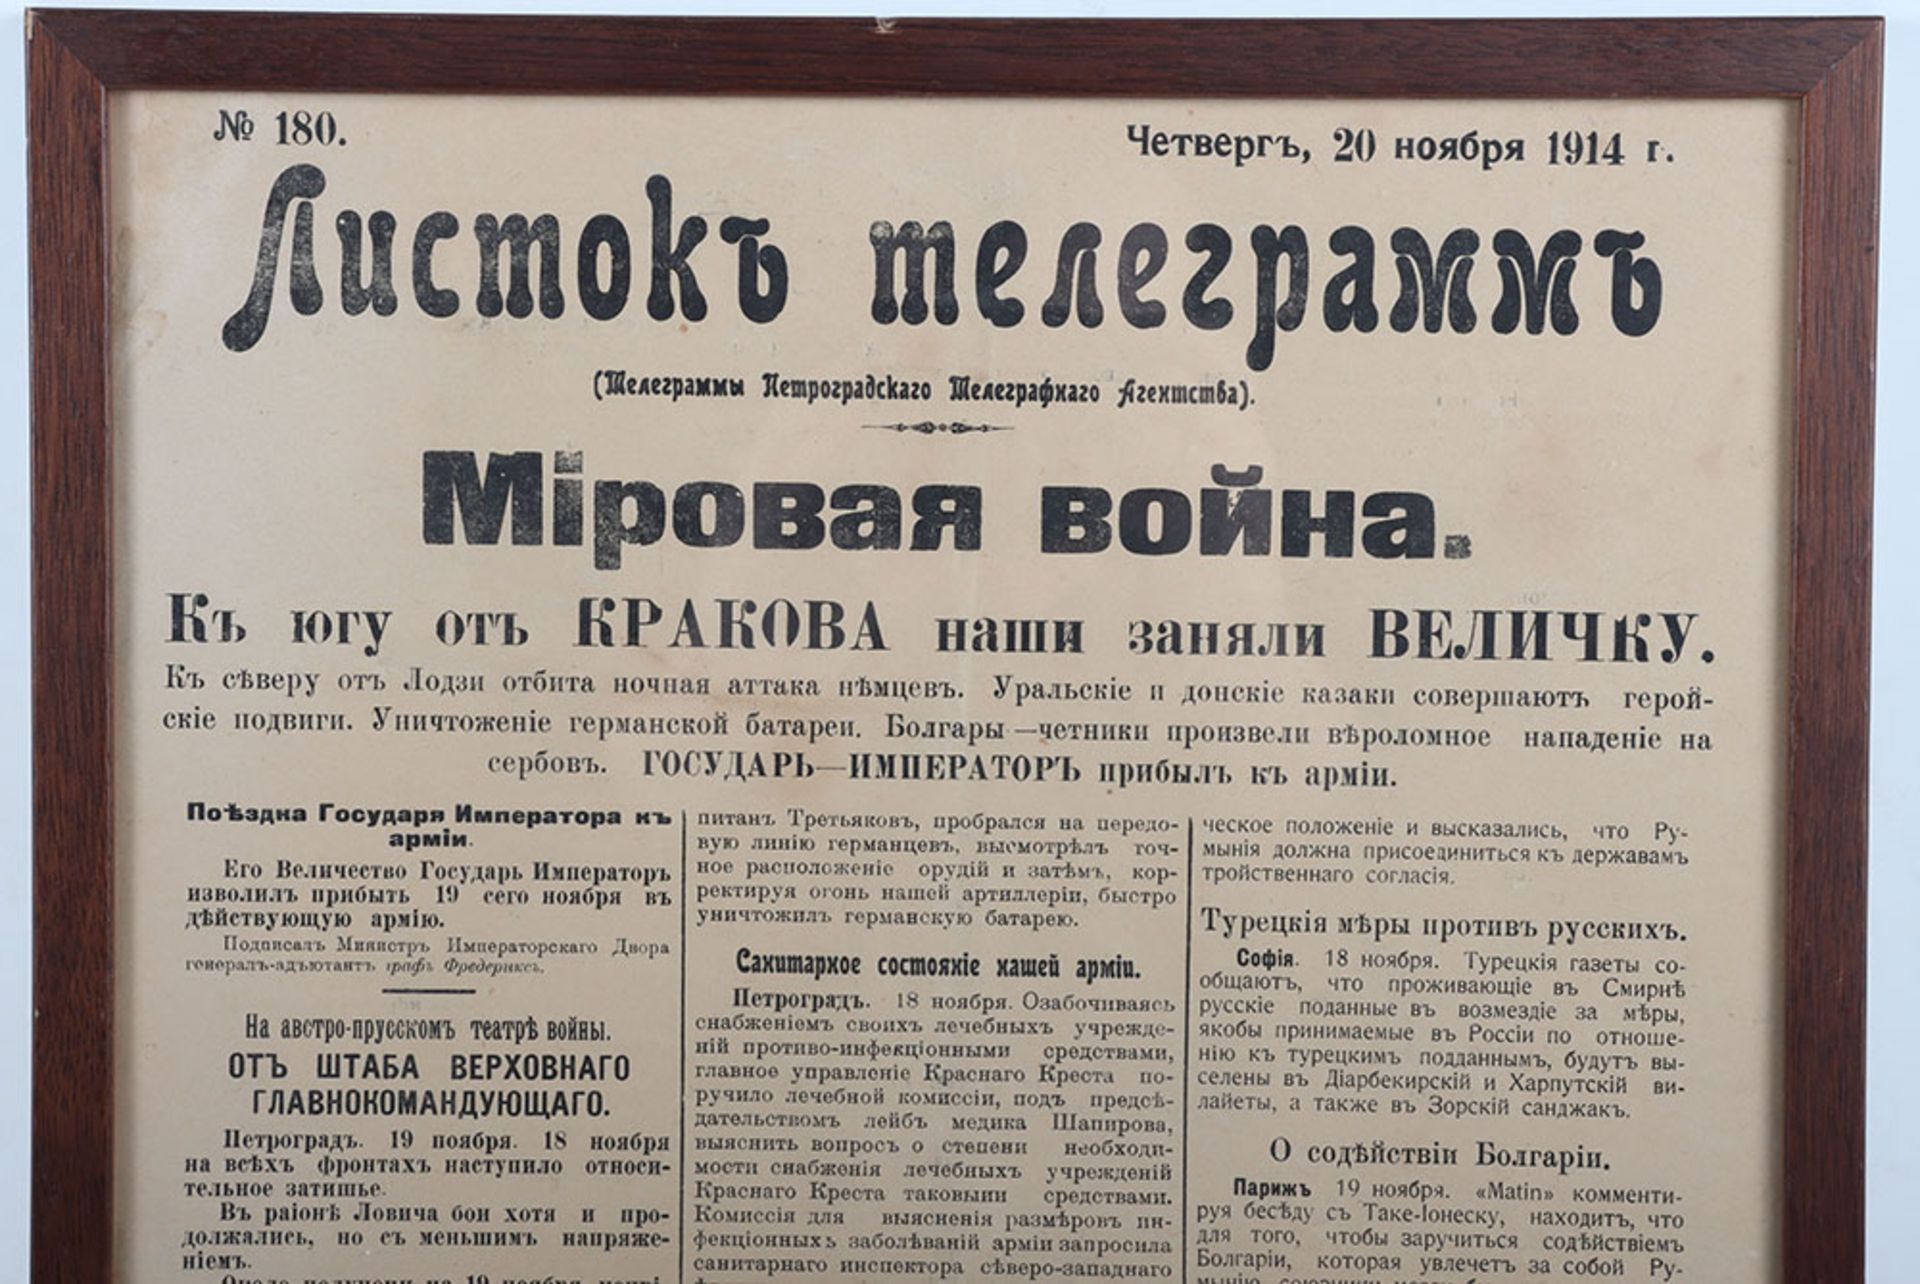 Imperial Russian 1914 Printed Brochure of Telegrams - Image 2 of 4